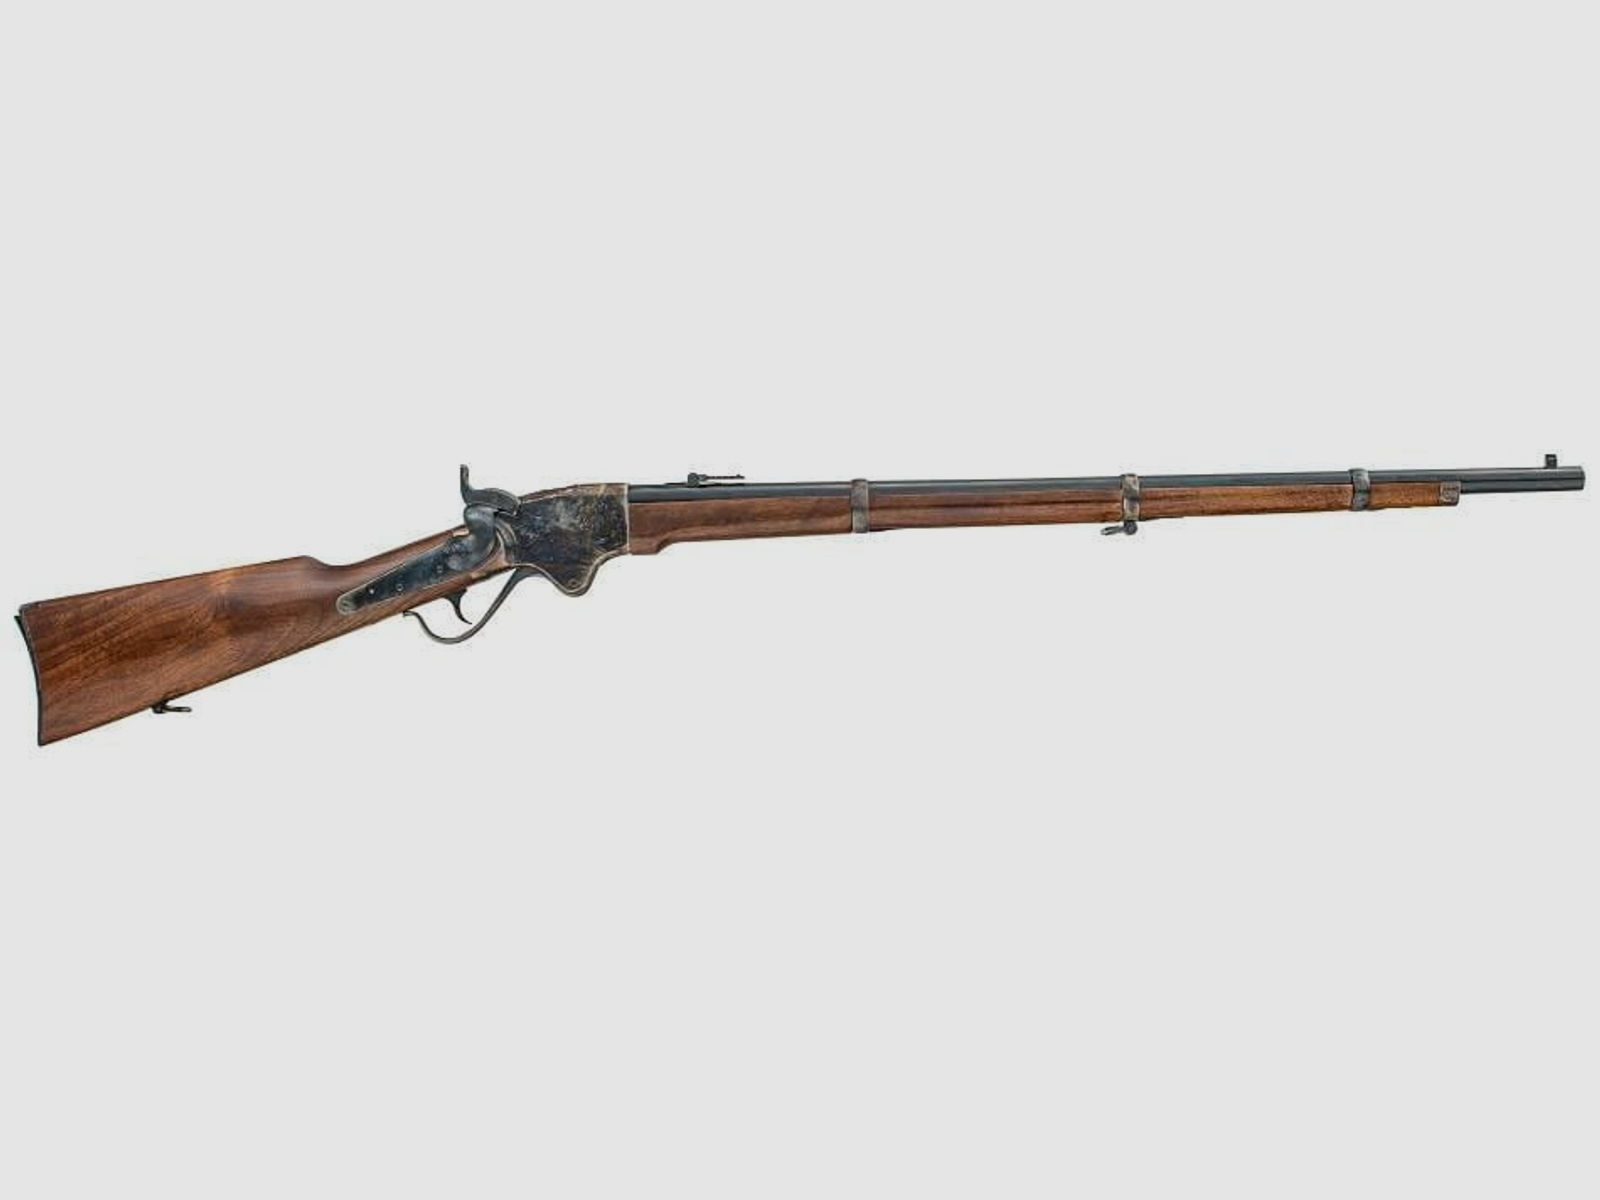 Chiappa 1860 Spencer Rifle Unterhebelrepetierbüchse Kal. .45 Colt